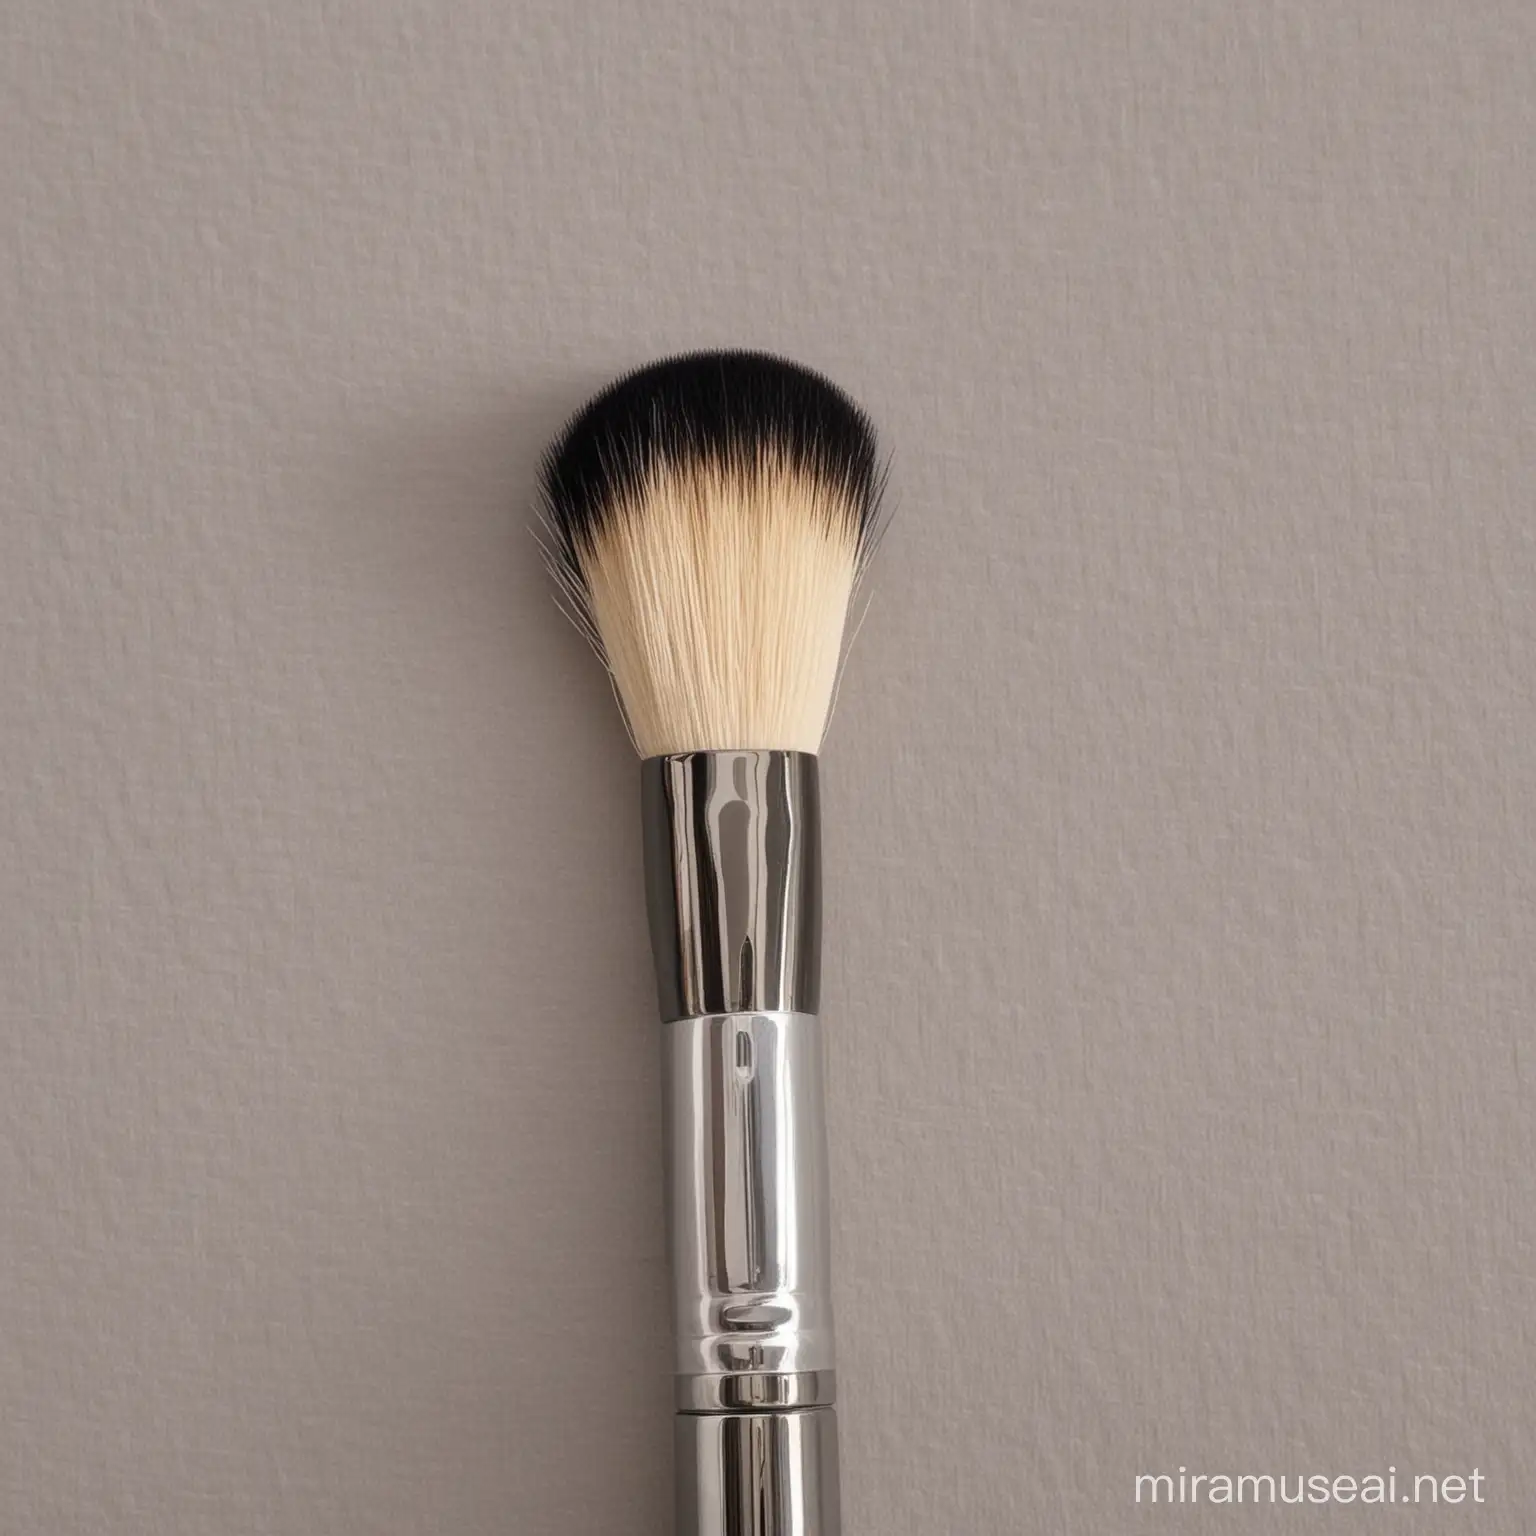 Elegant Makeup Brush with Half Moon Design for Glamorous Beauty Looks